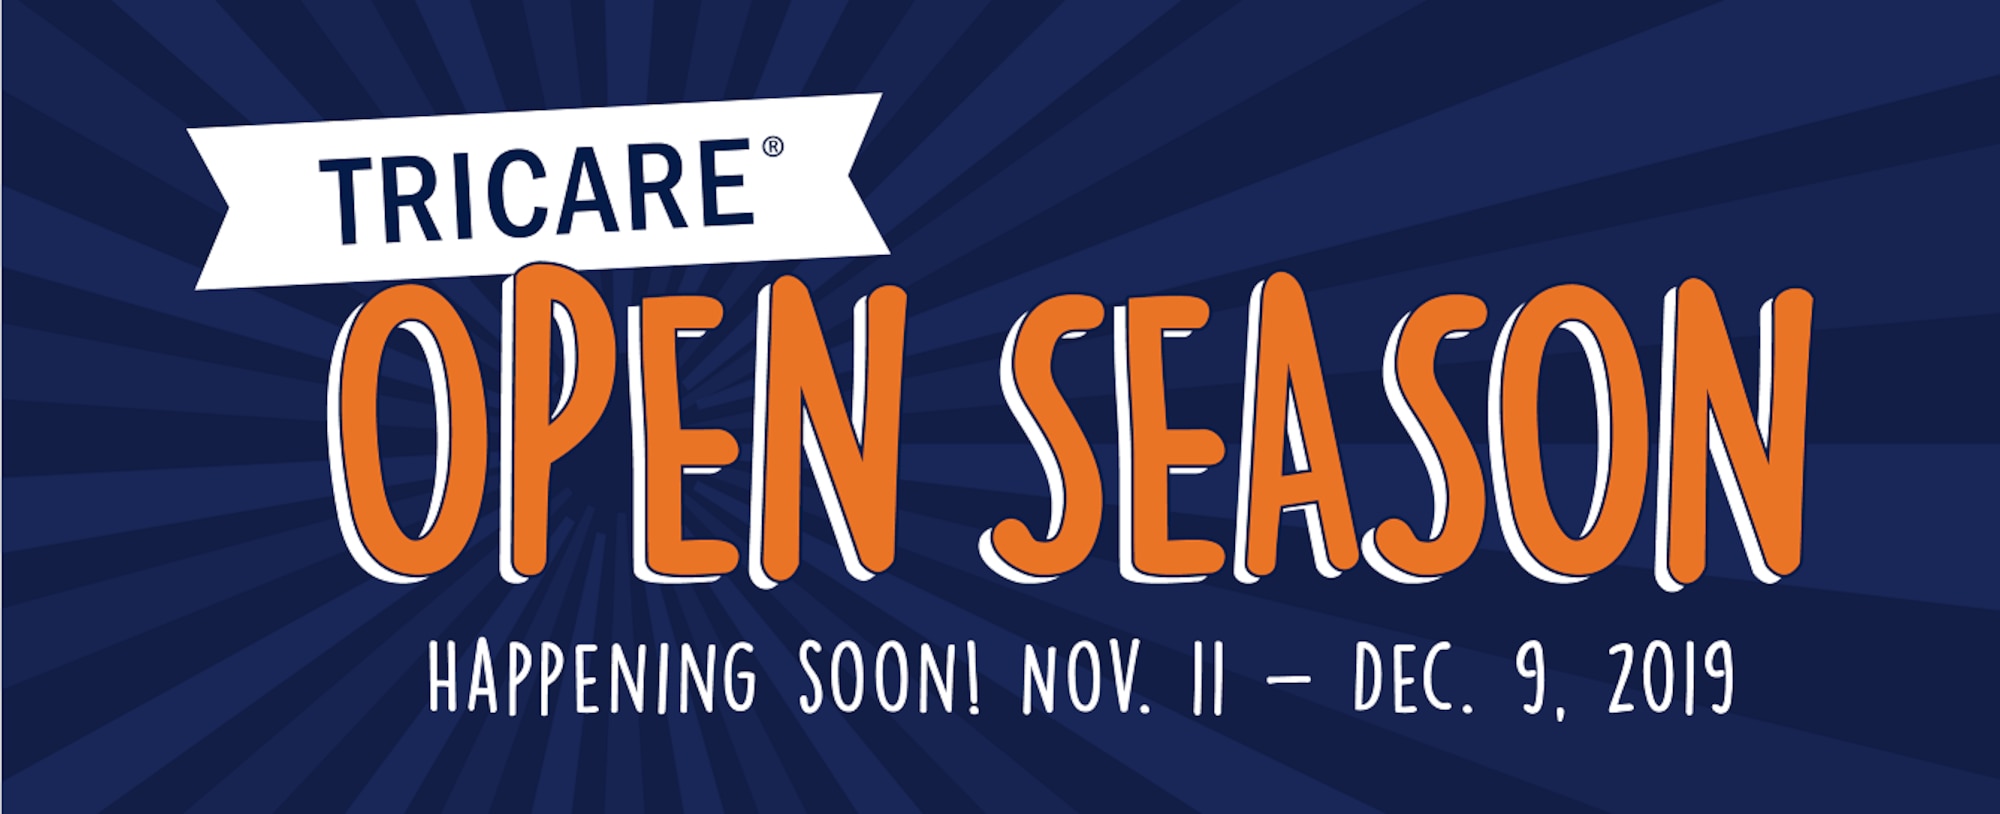 TRICARE Open Season. Happening soon! Nov. 11 - Dec. 9, 2019. (TRICARE graphic)